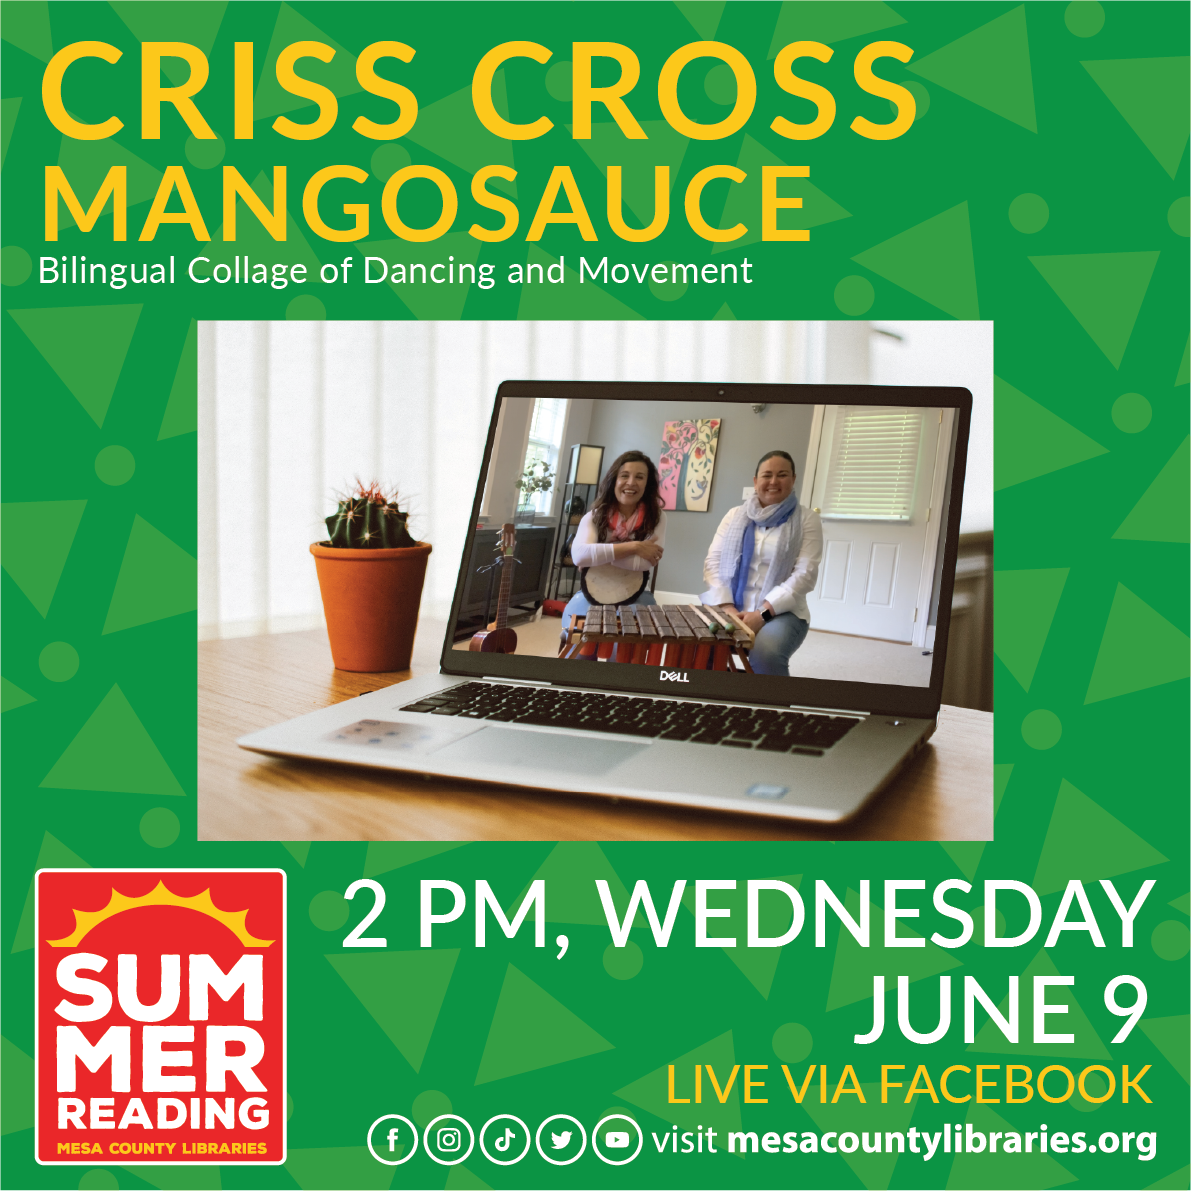 Graphic detailing program details for Criss Cross MangoSauce event